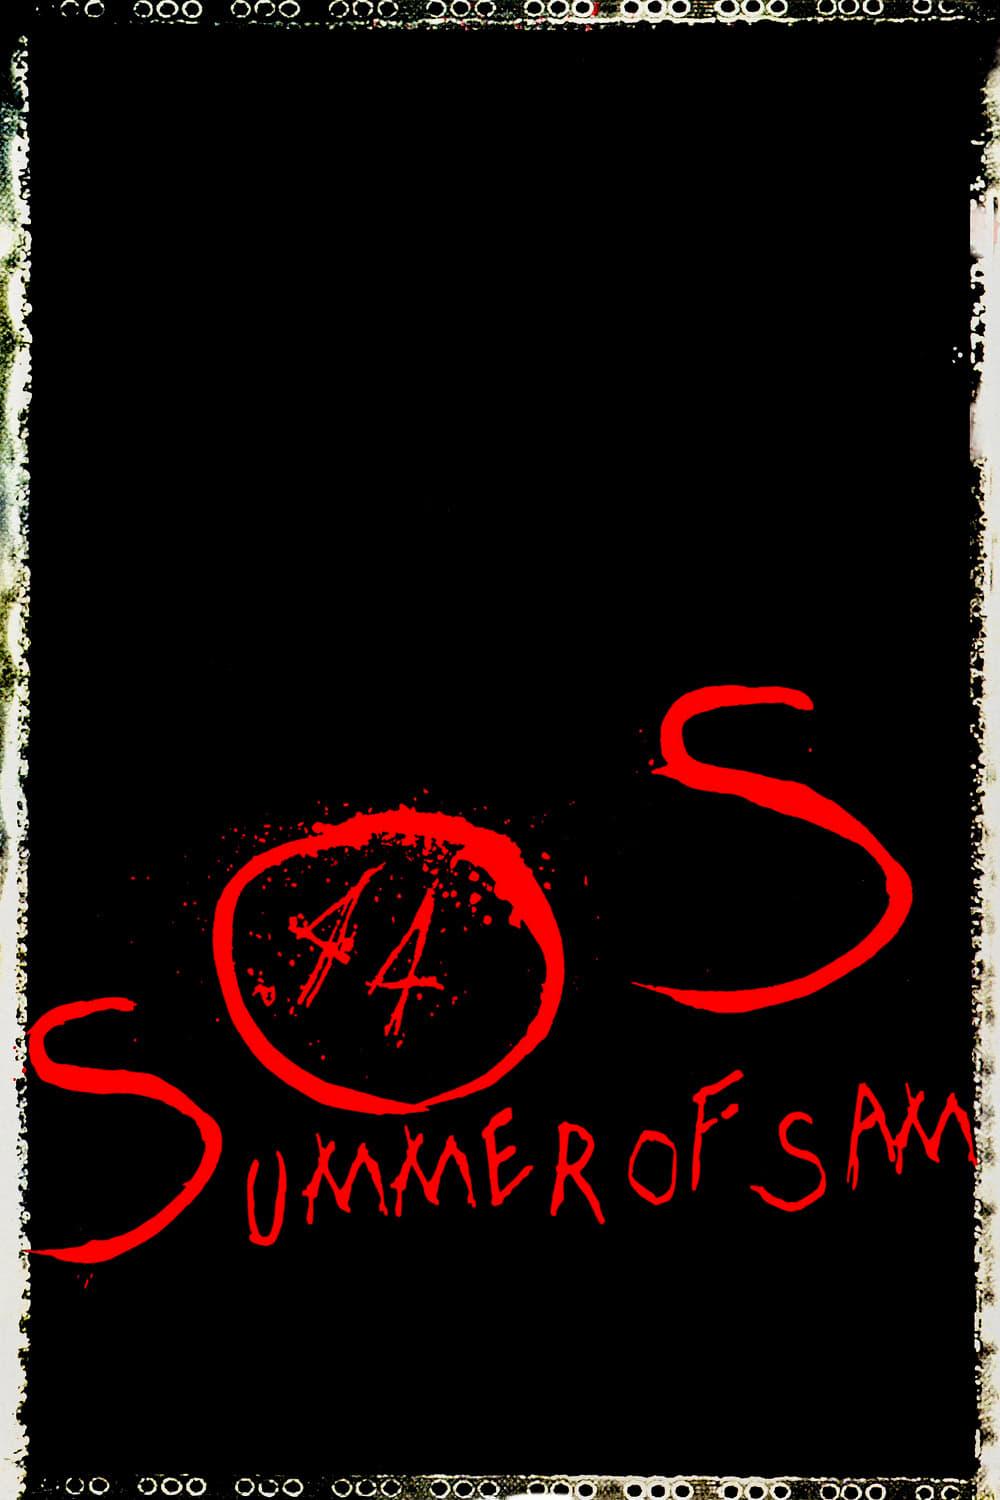 Summer of Sam poster